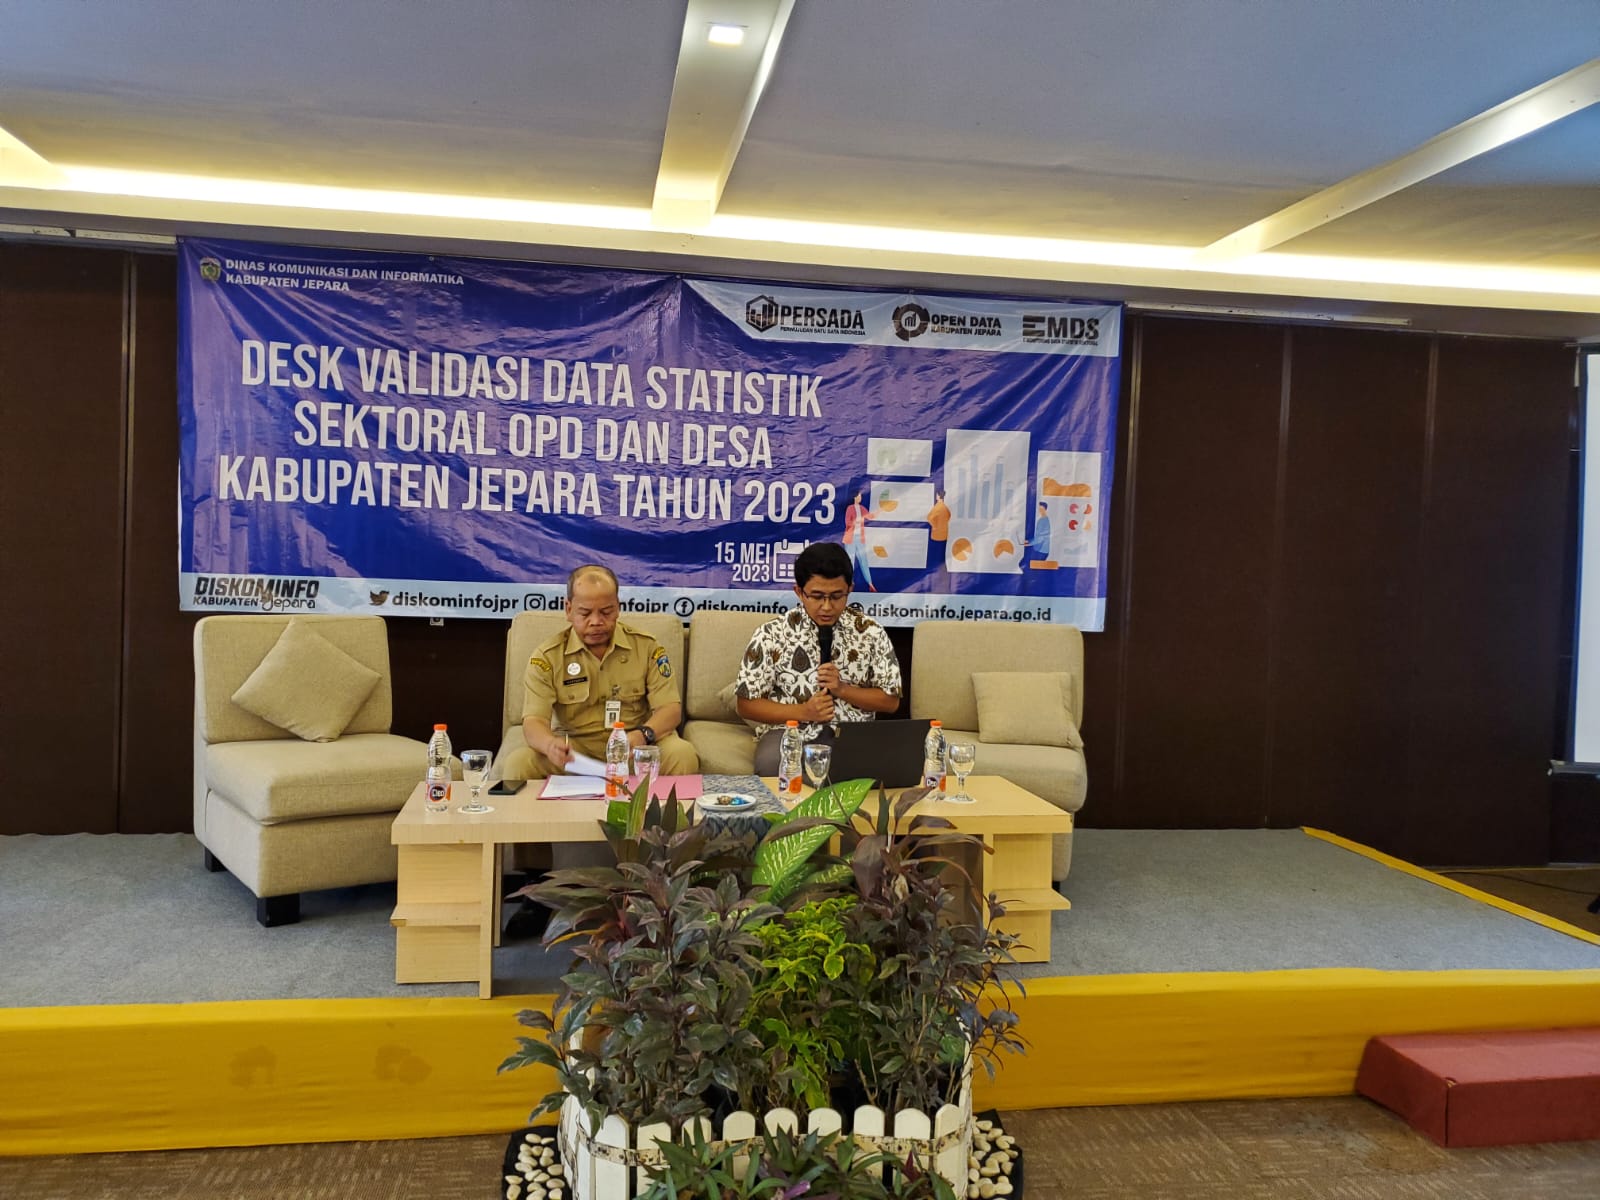 Kalaborasi Departemen Statistika Undip dan Dinas Komunikasi dan Informatika Kabupaten Jepara Memadukan Keahlian Validasi Data Data Sektoral 2023